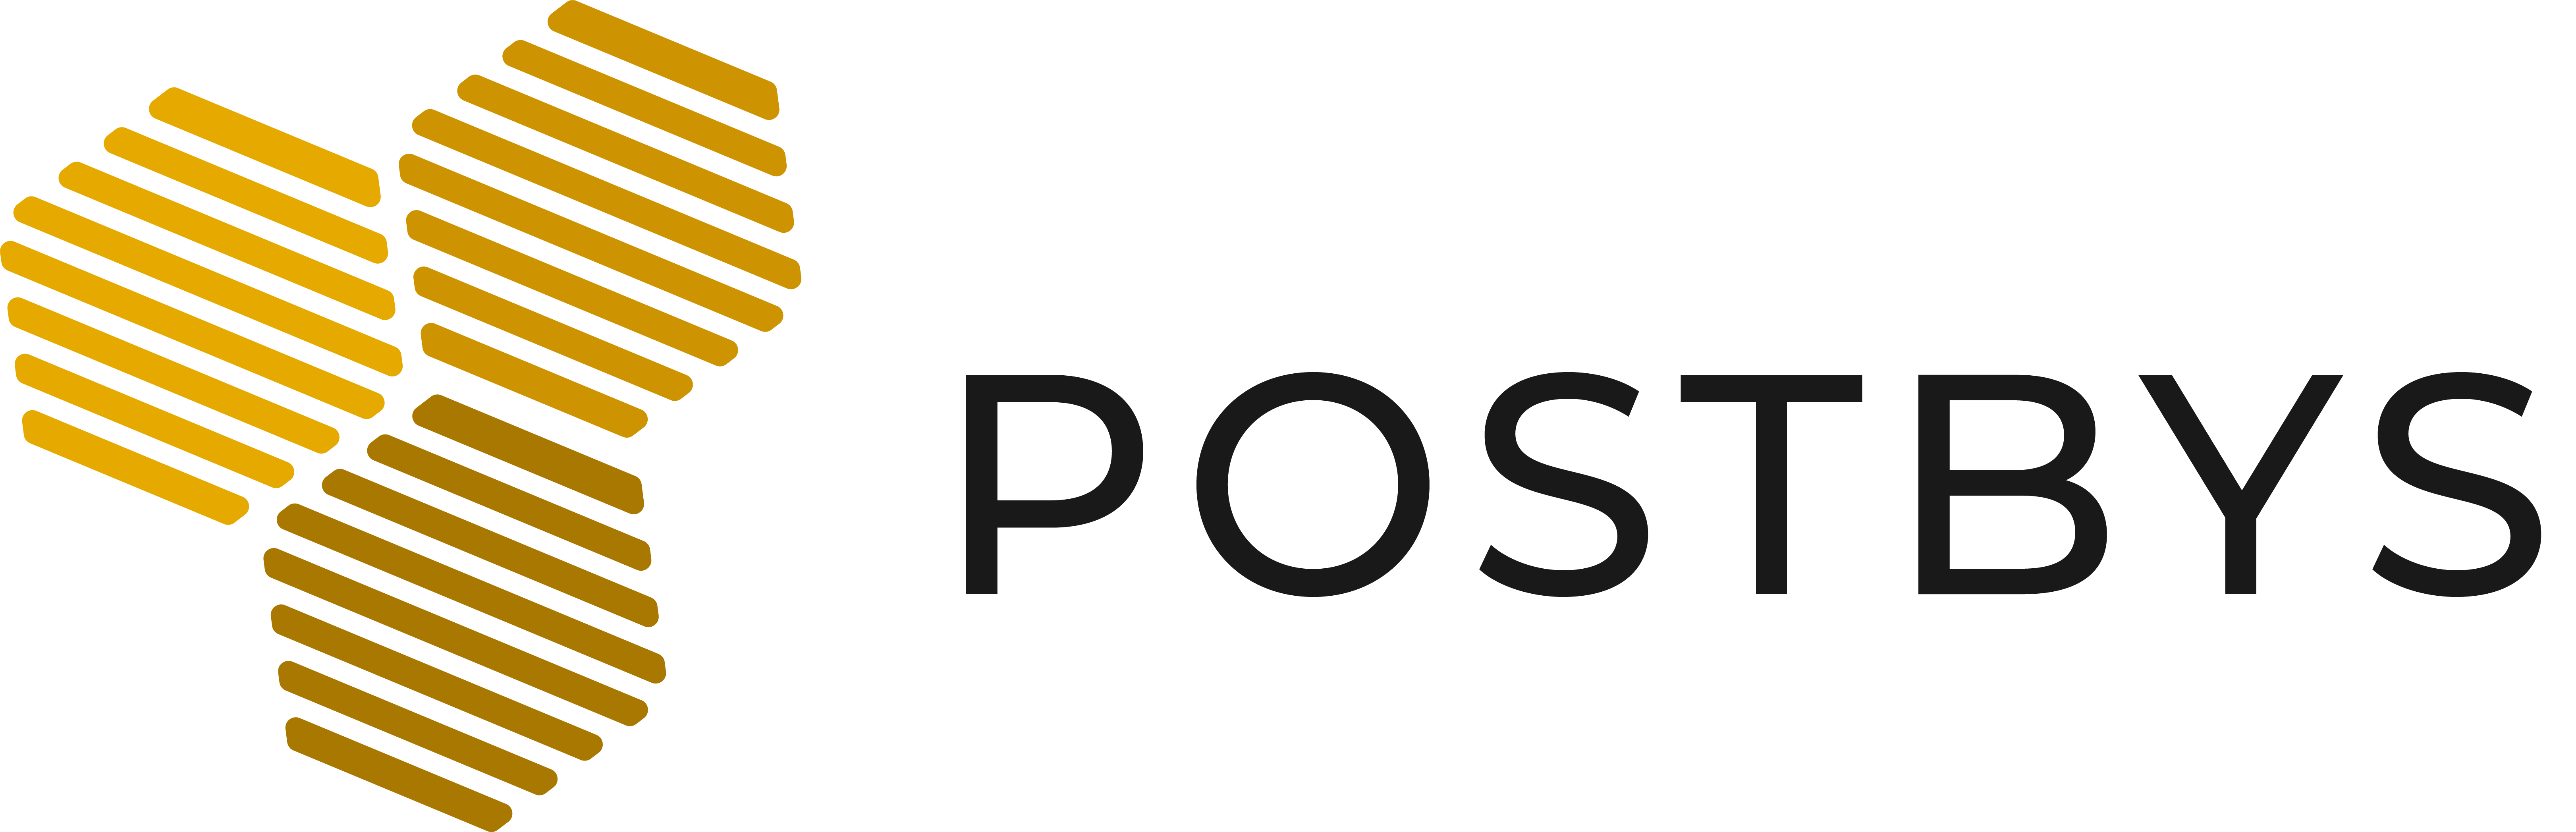 Why use Postbys?